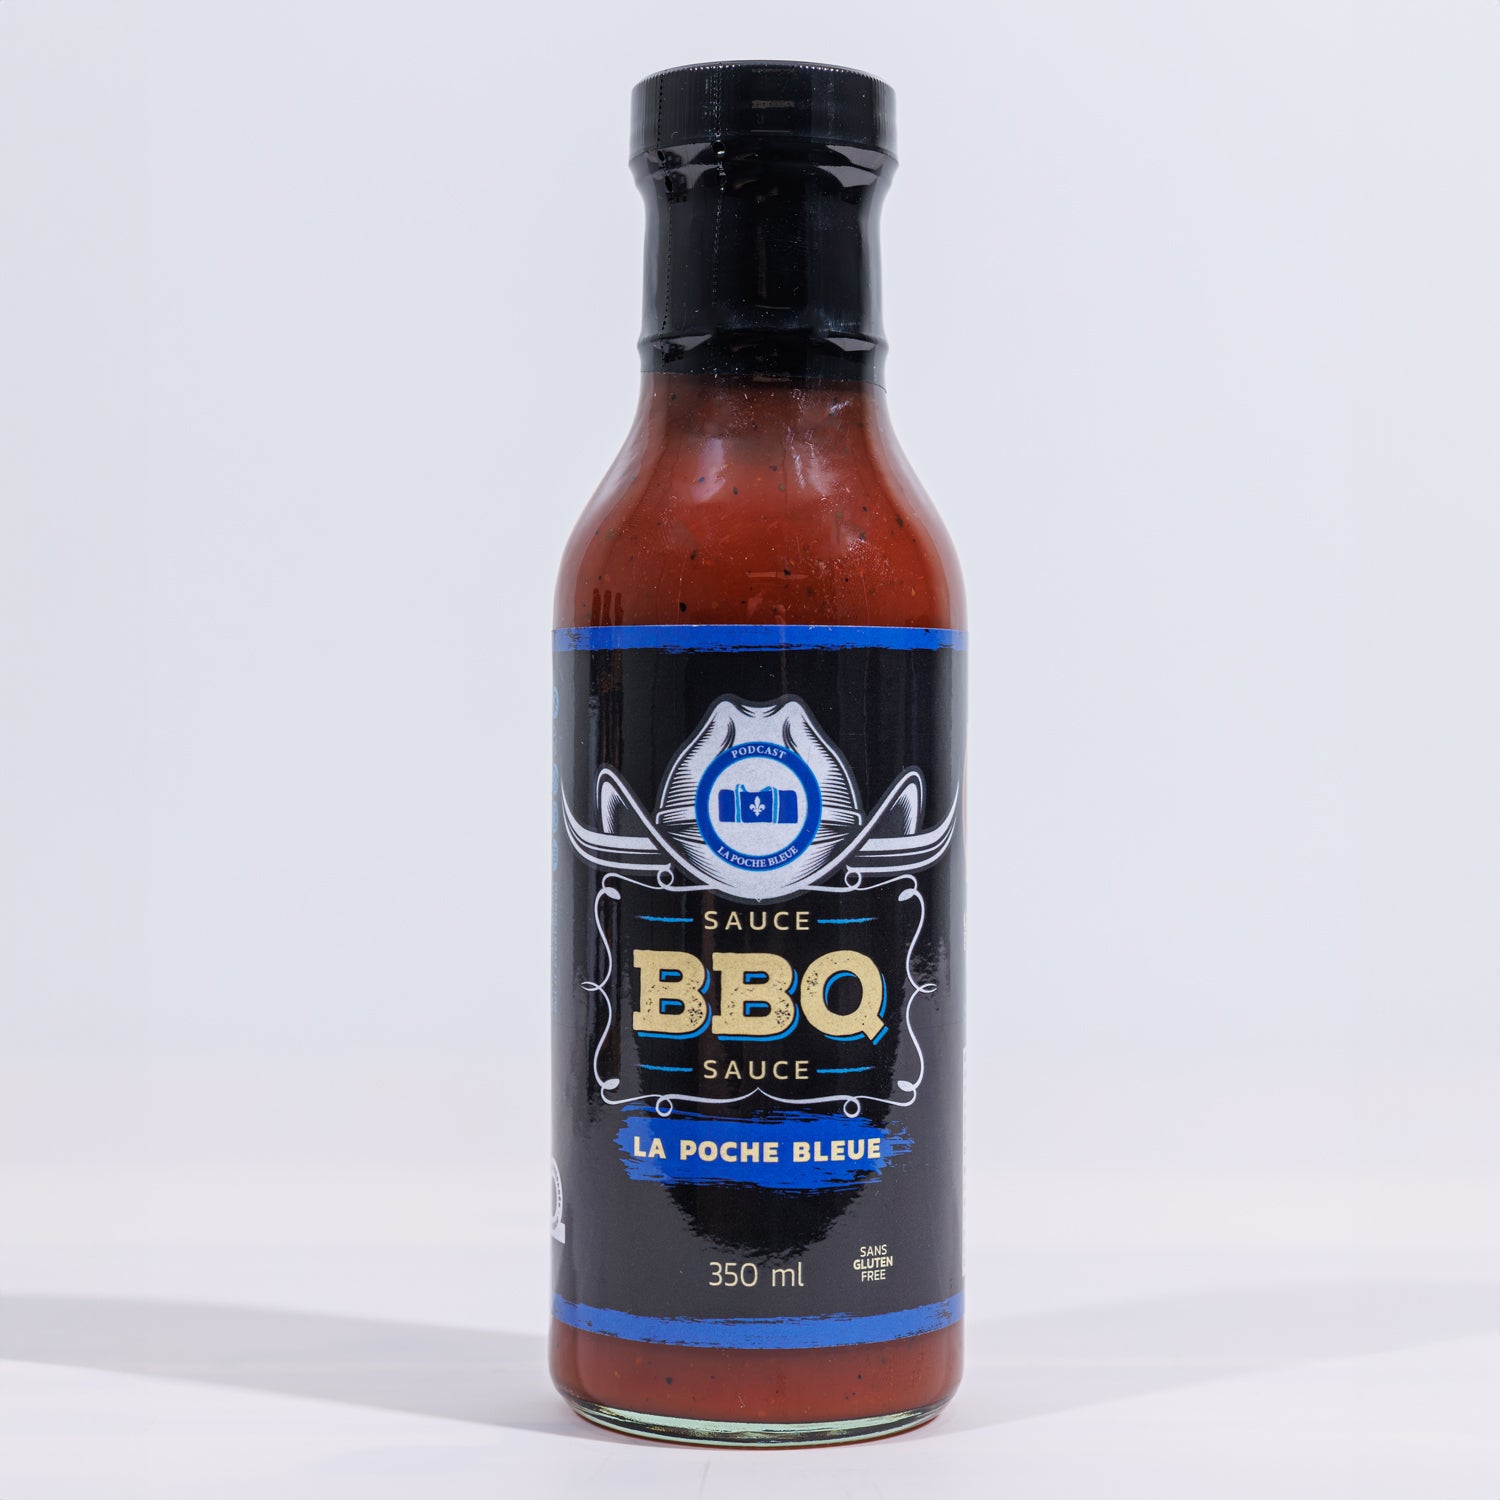 La Poche Bleue - Sauce BBQ 350 ml - PatBBQ